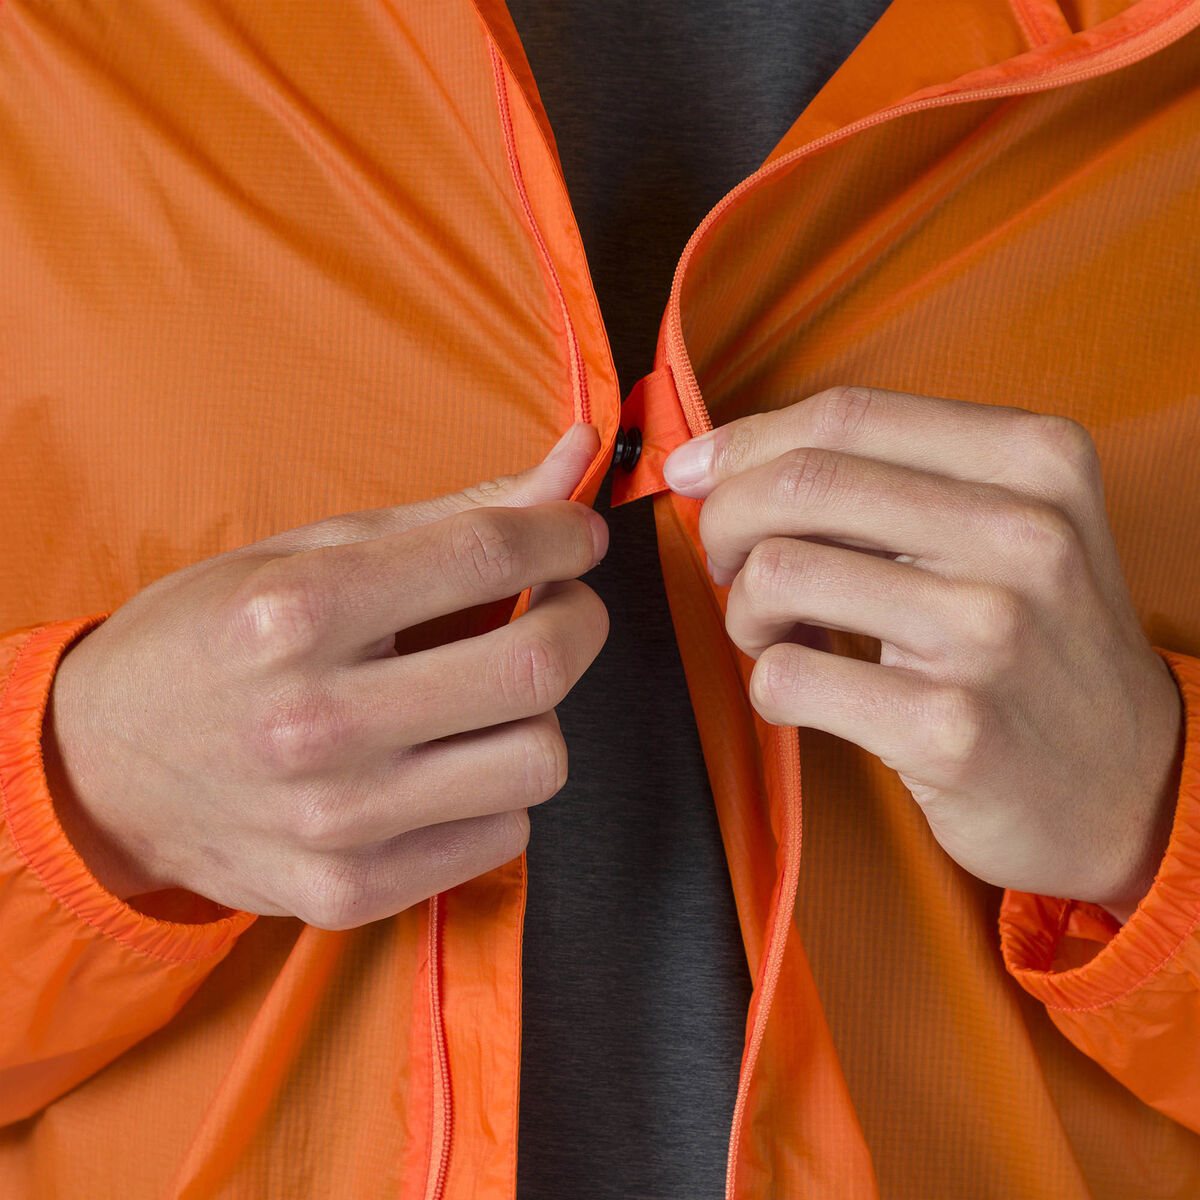 Men's Ultralight Packable Jacket